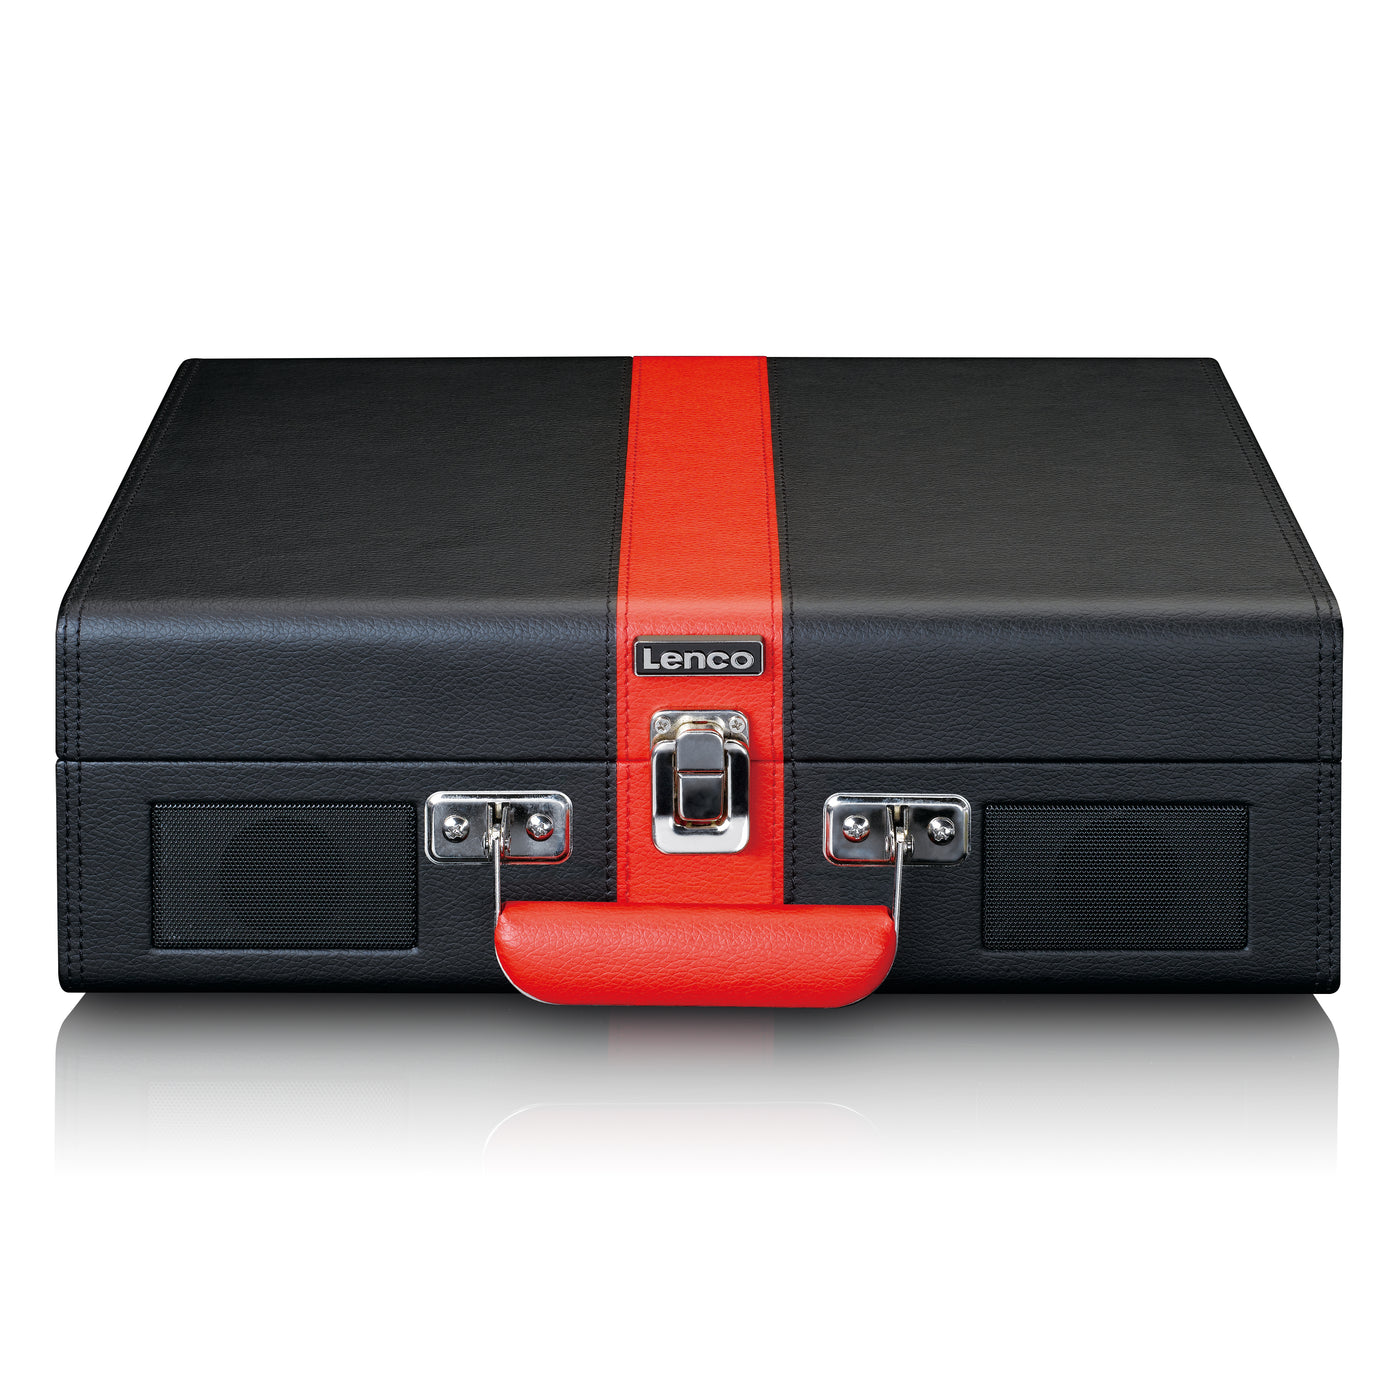 CLASSIC PHONO TT-110BKRD - Platenspeler met Bluetooth® ontvangst en ingebouwde speakers - Zwart Rood